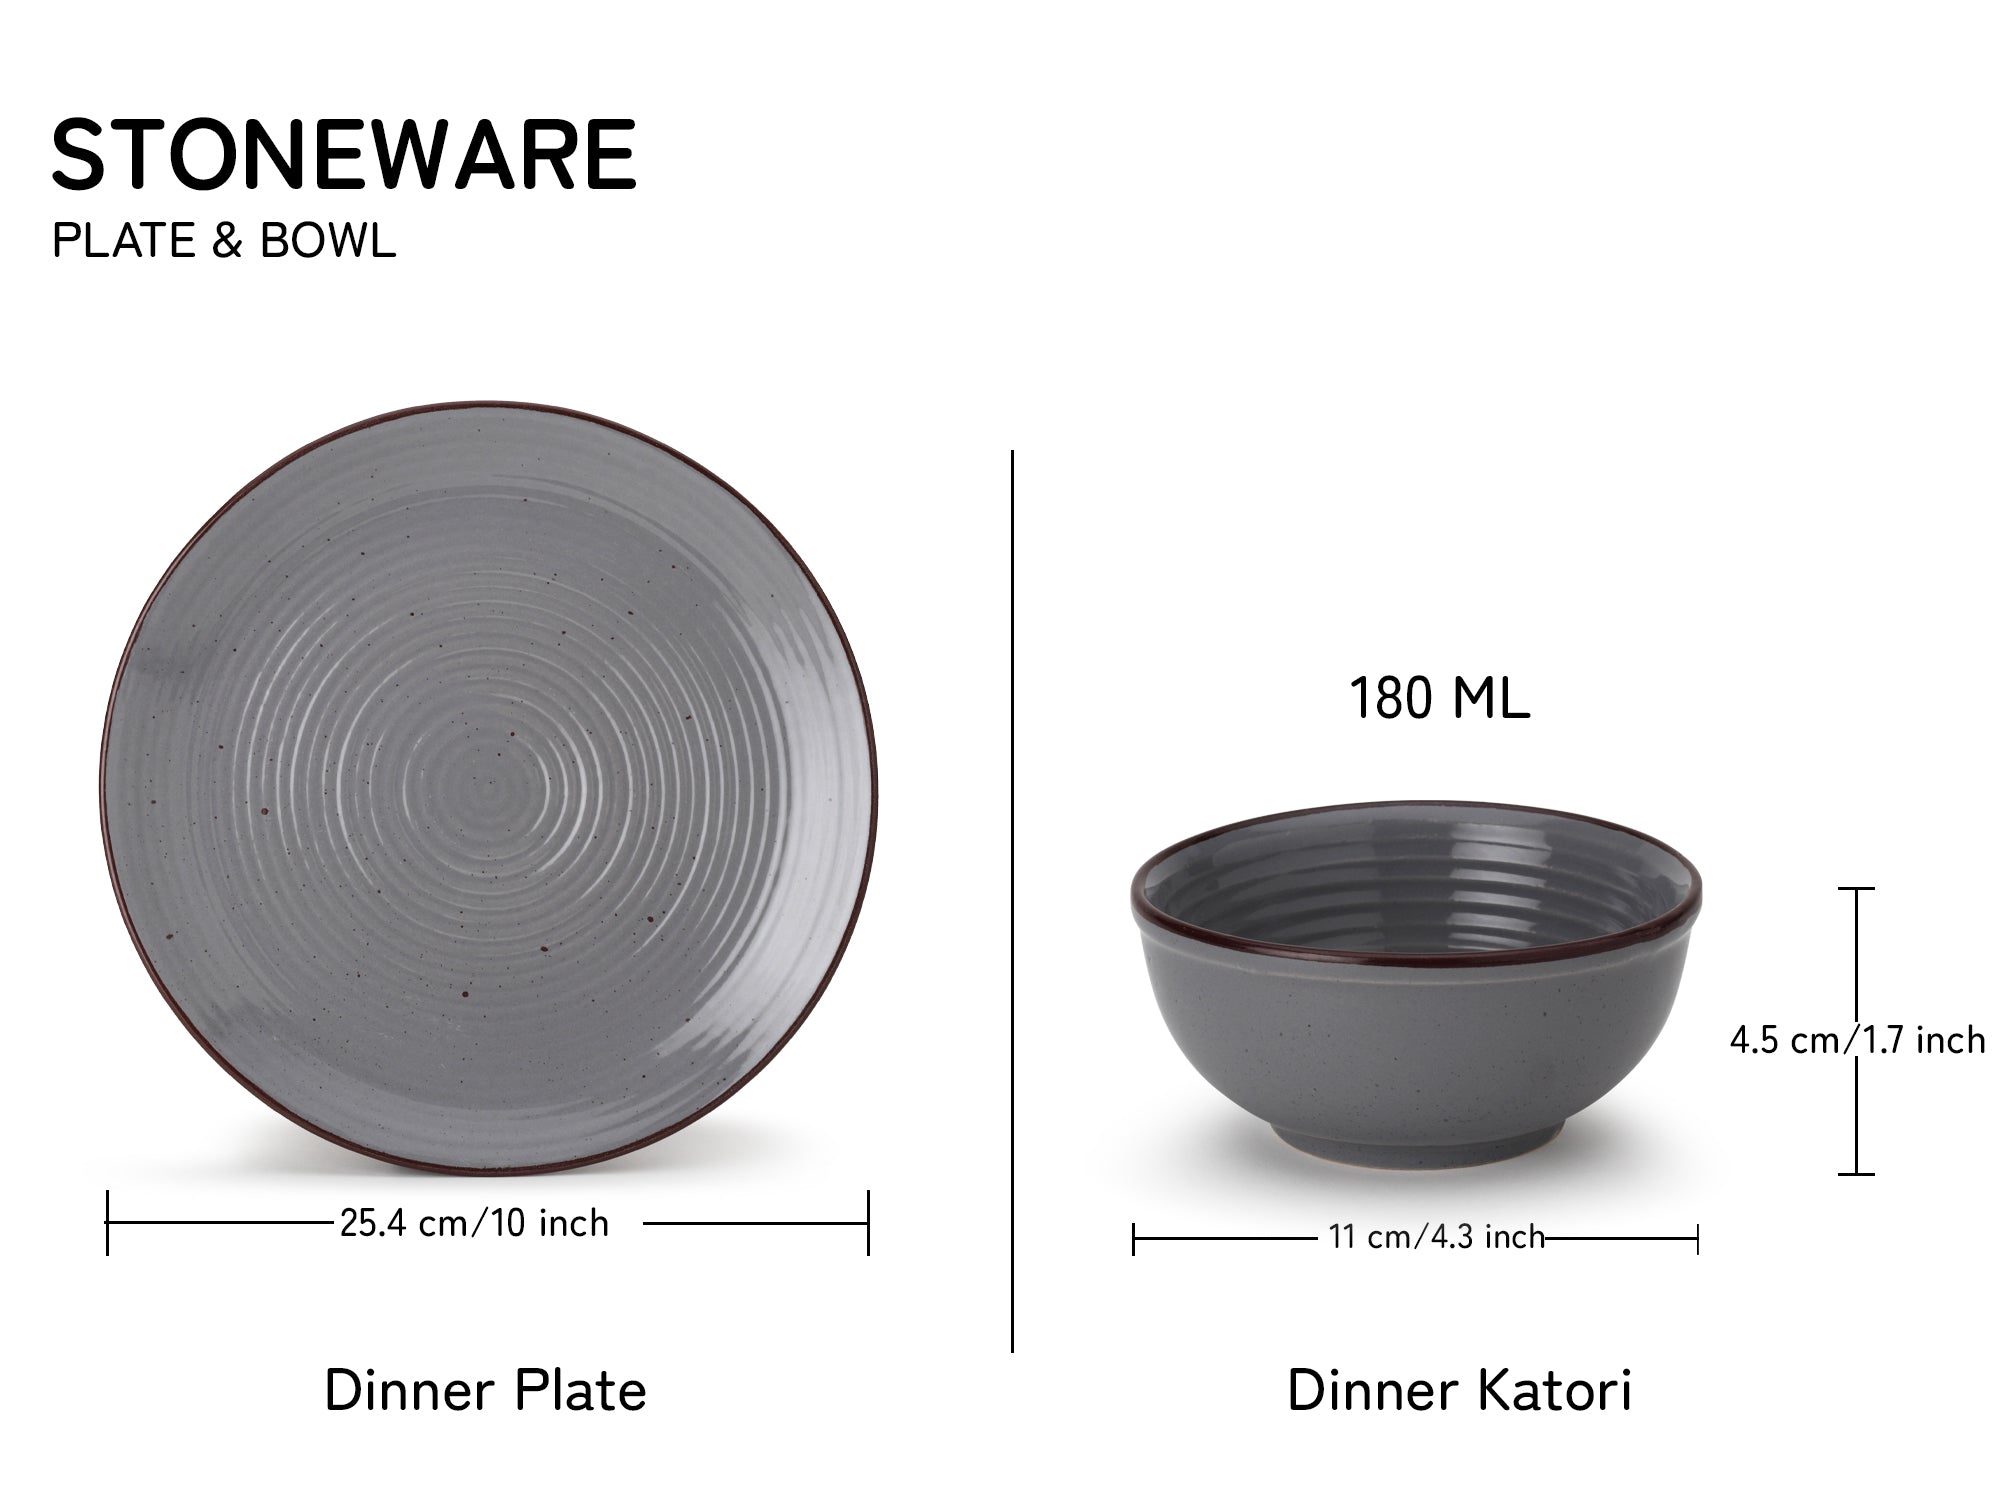 Graphite Noir Dining Ensemble - 2 Dinner Plates & 4 Bowls/Katoris